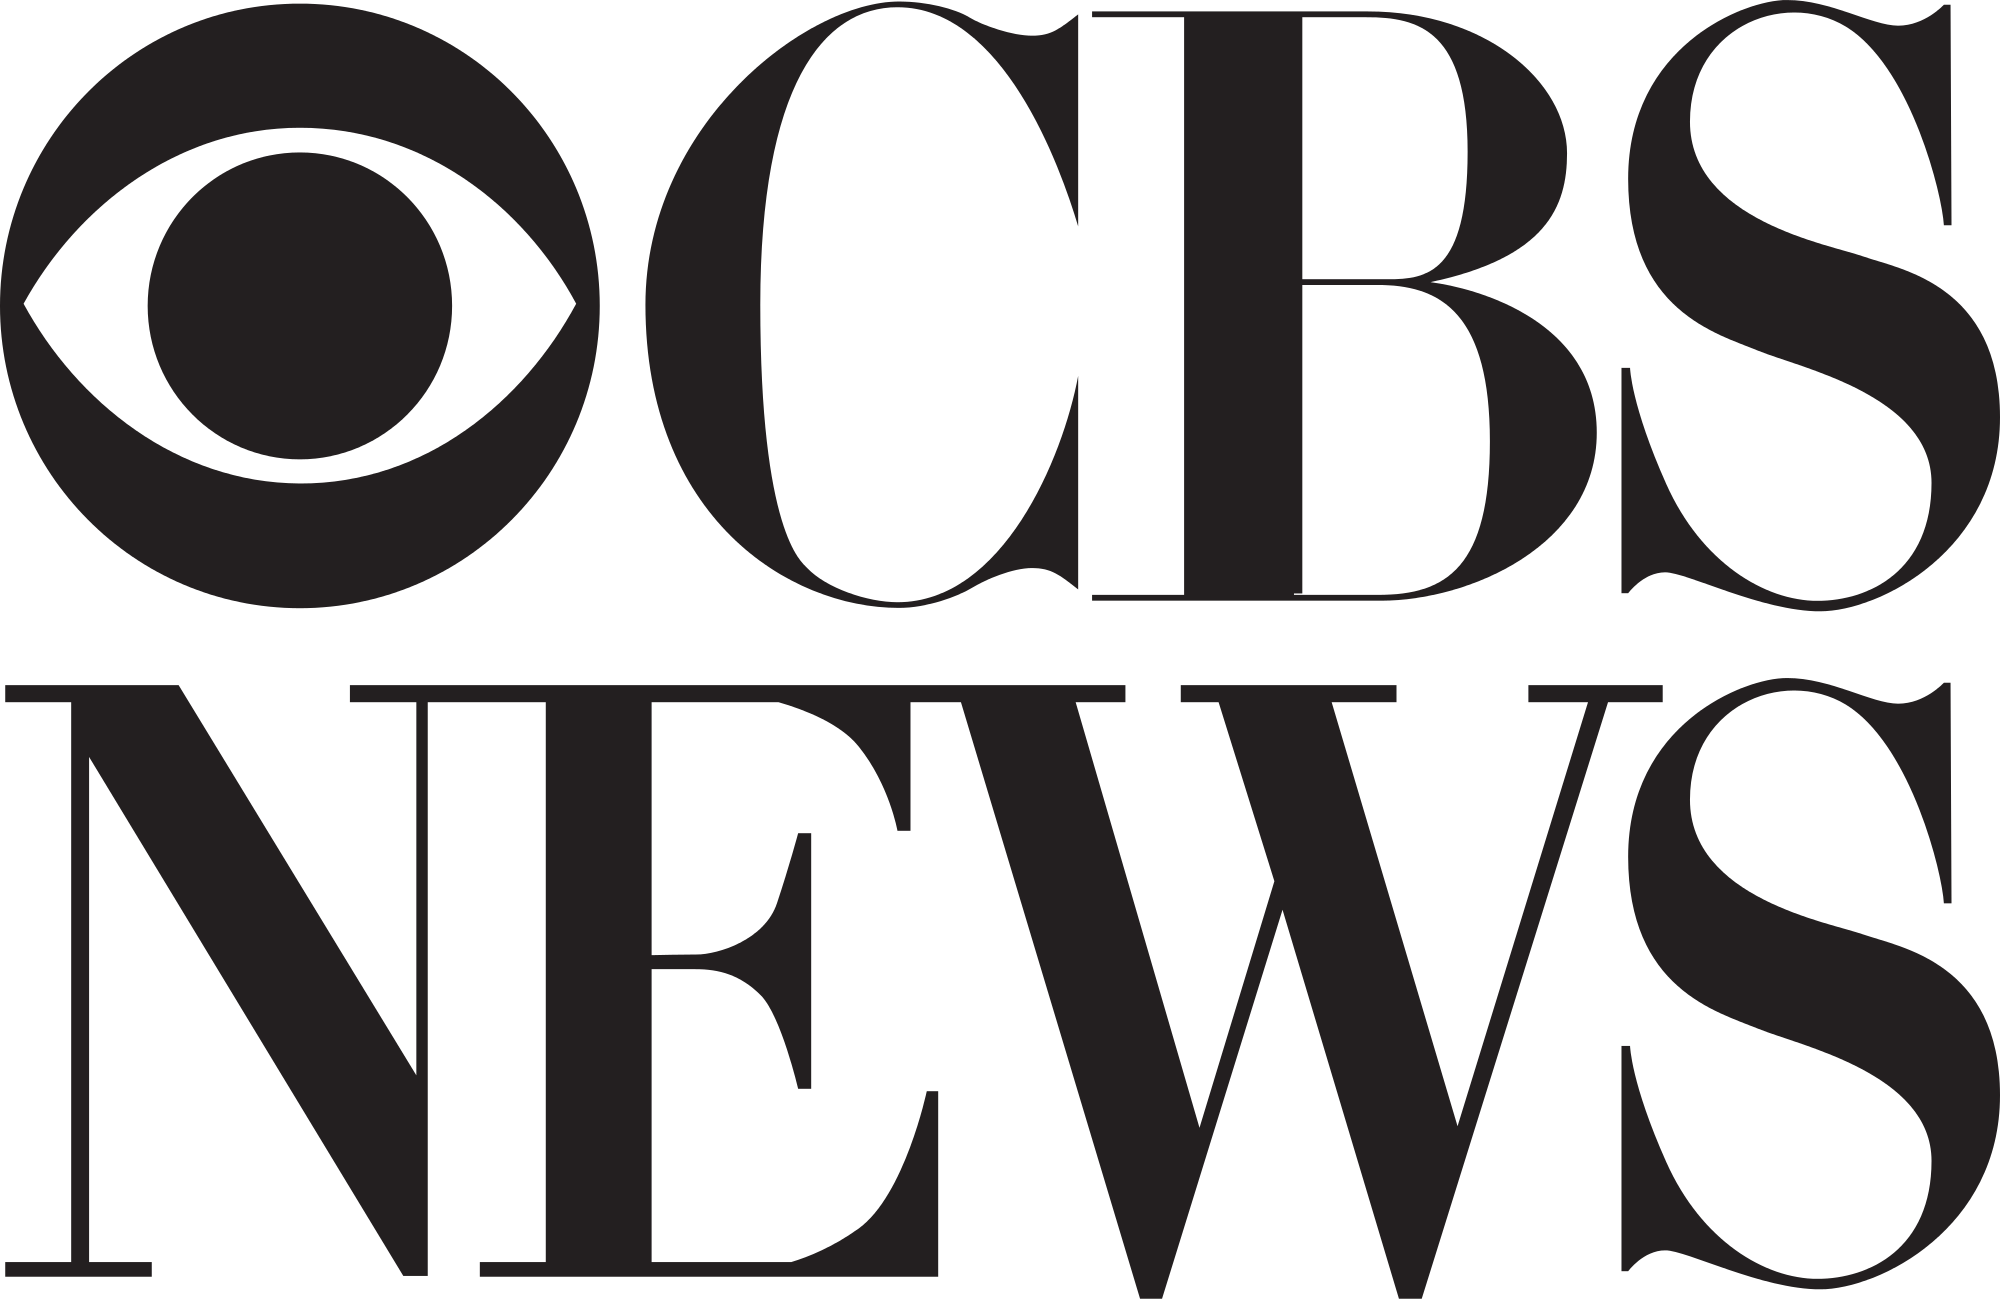 CBS_News.svg